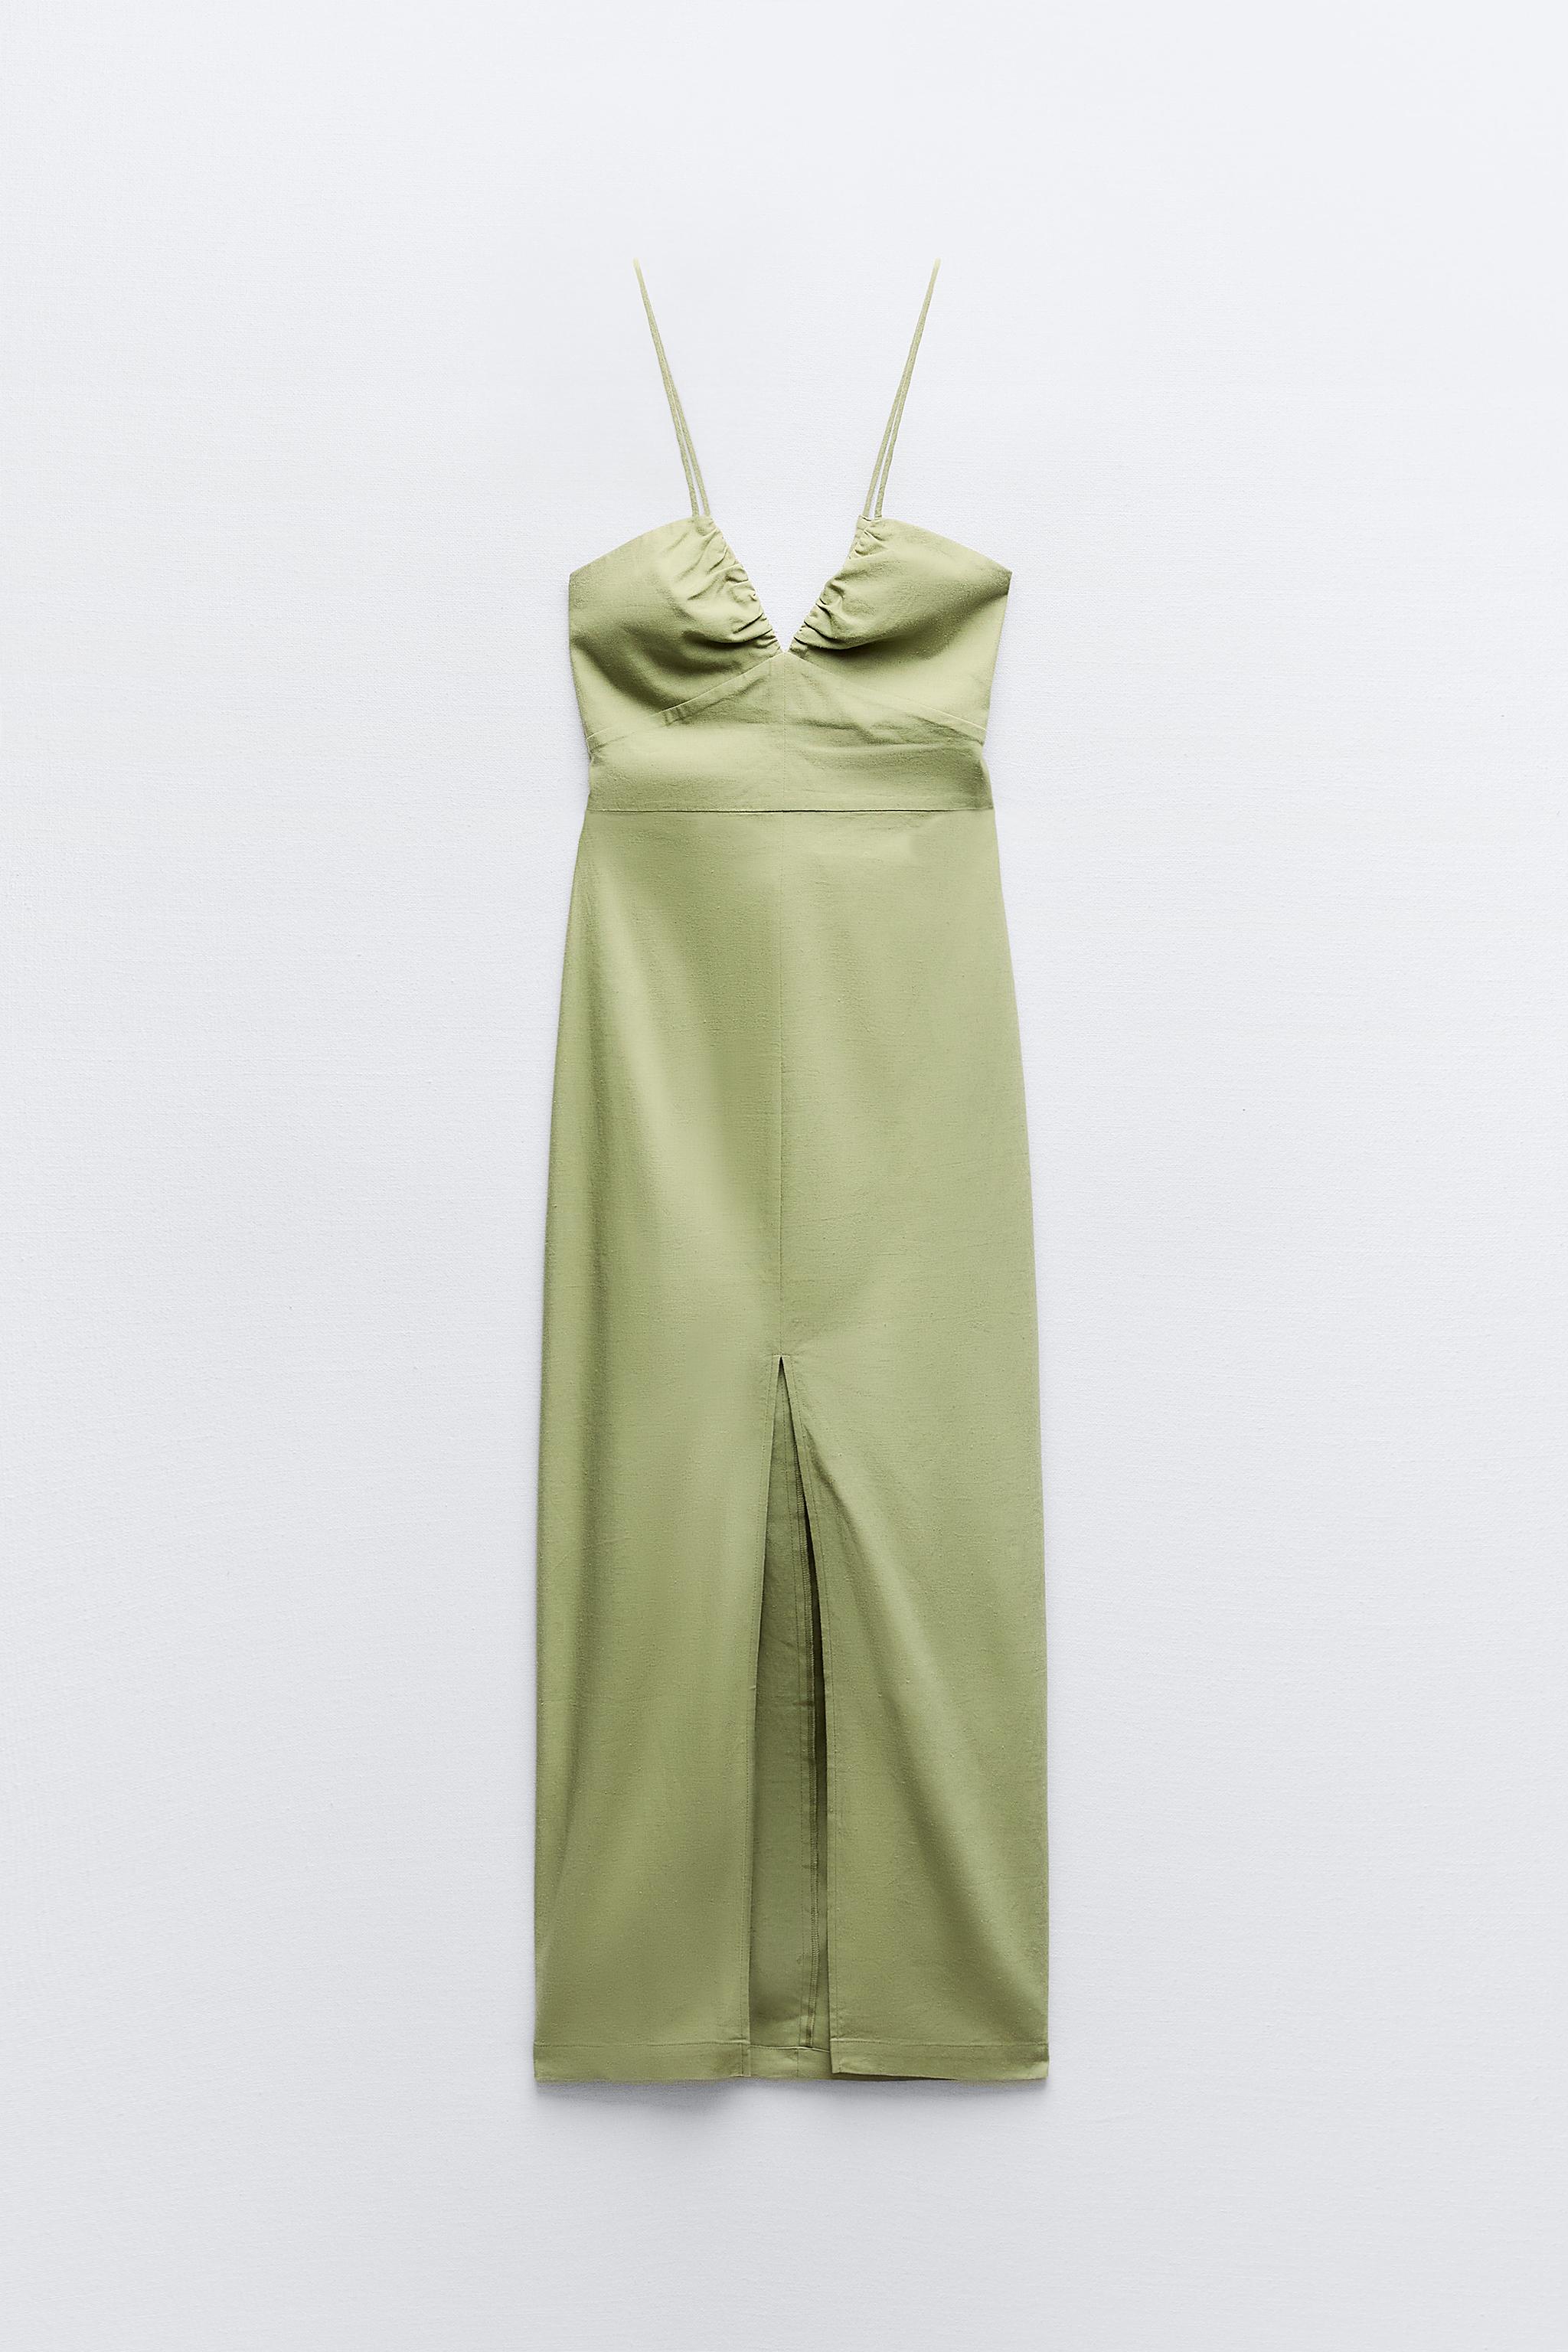 Brand New Zara Green Satin Dress XS, Wedding Guest